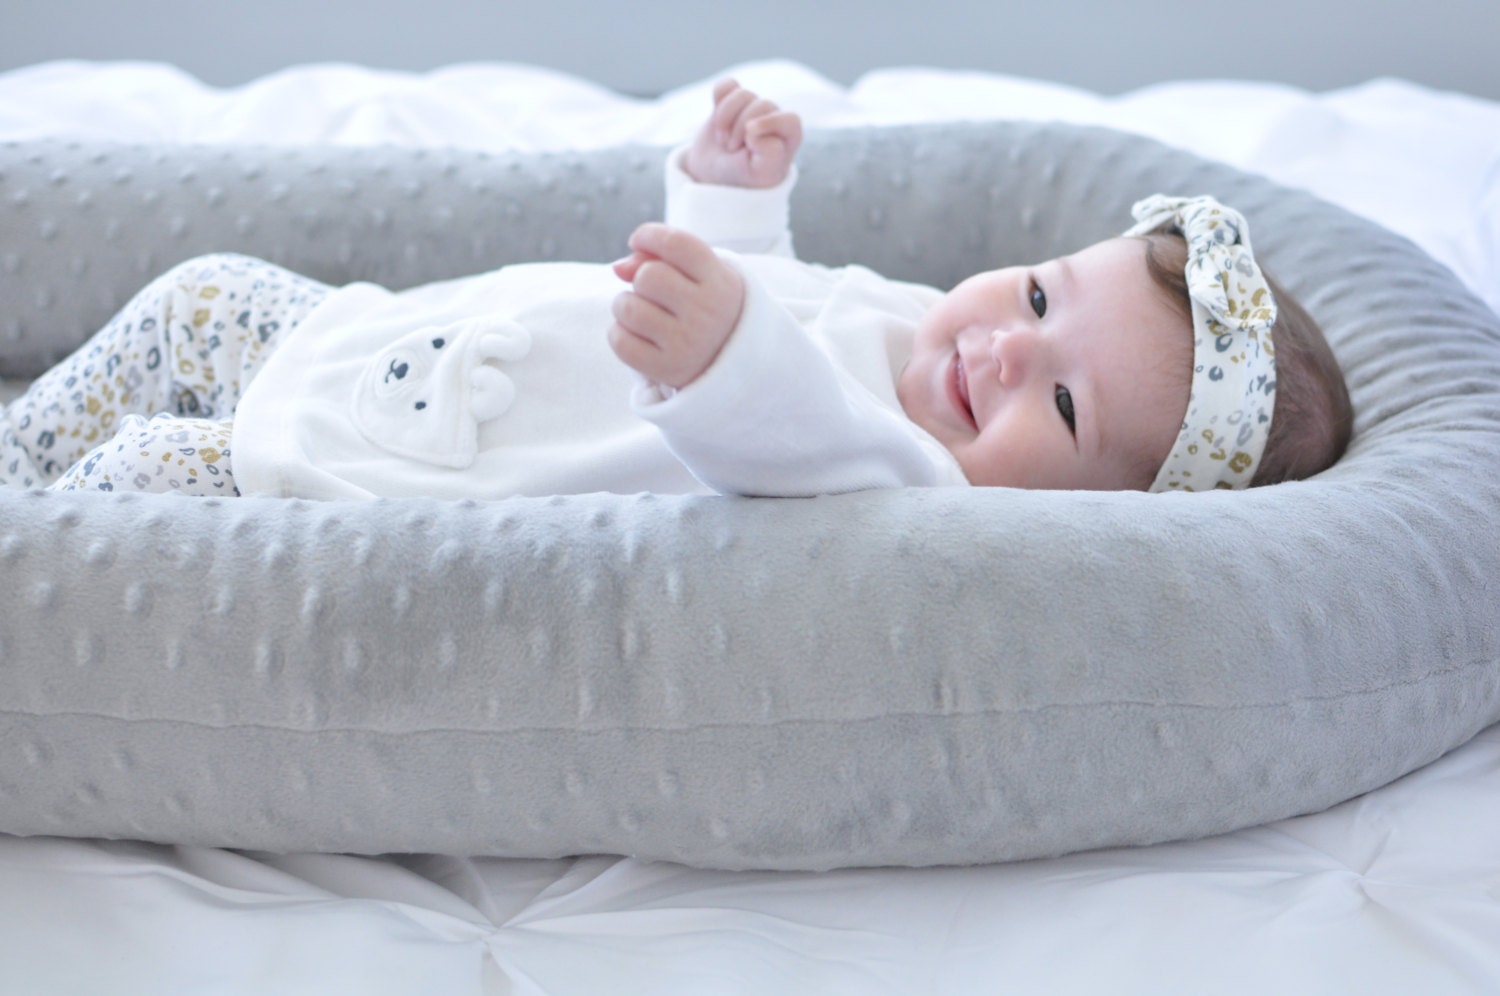 Cosleep Baby Bed white and gray cosleeping Baby Pillow